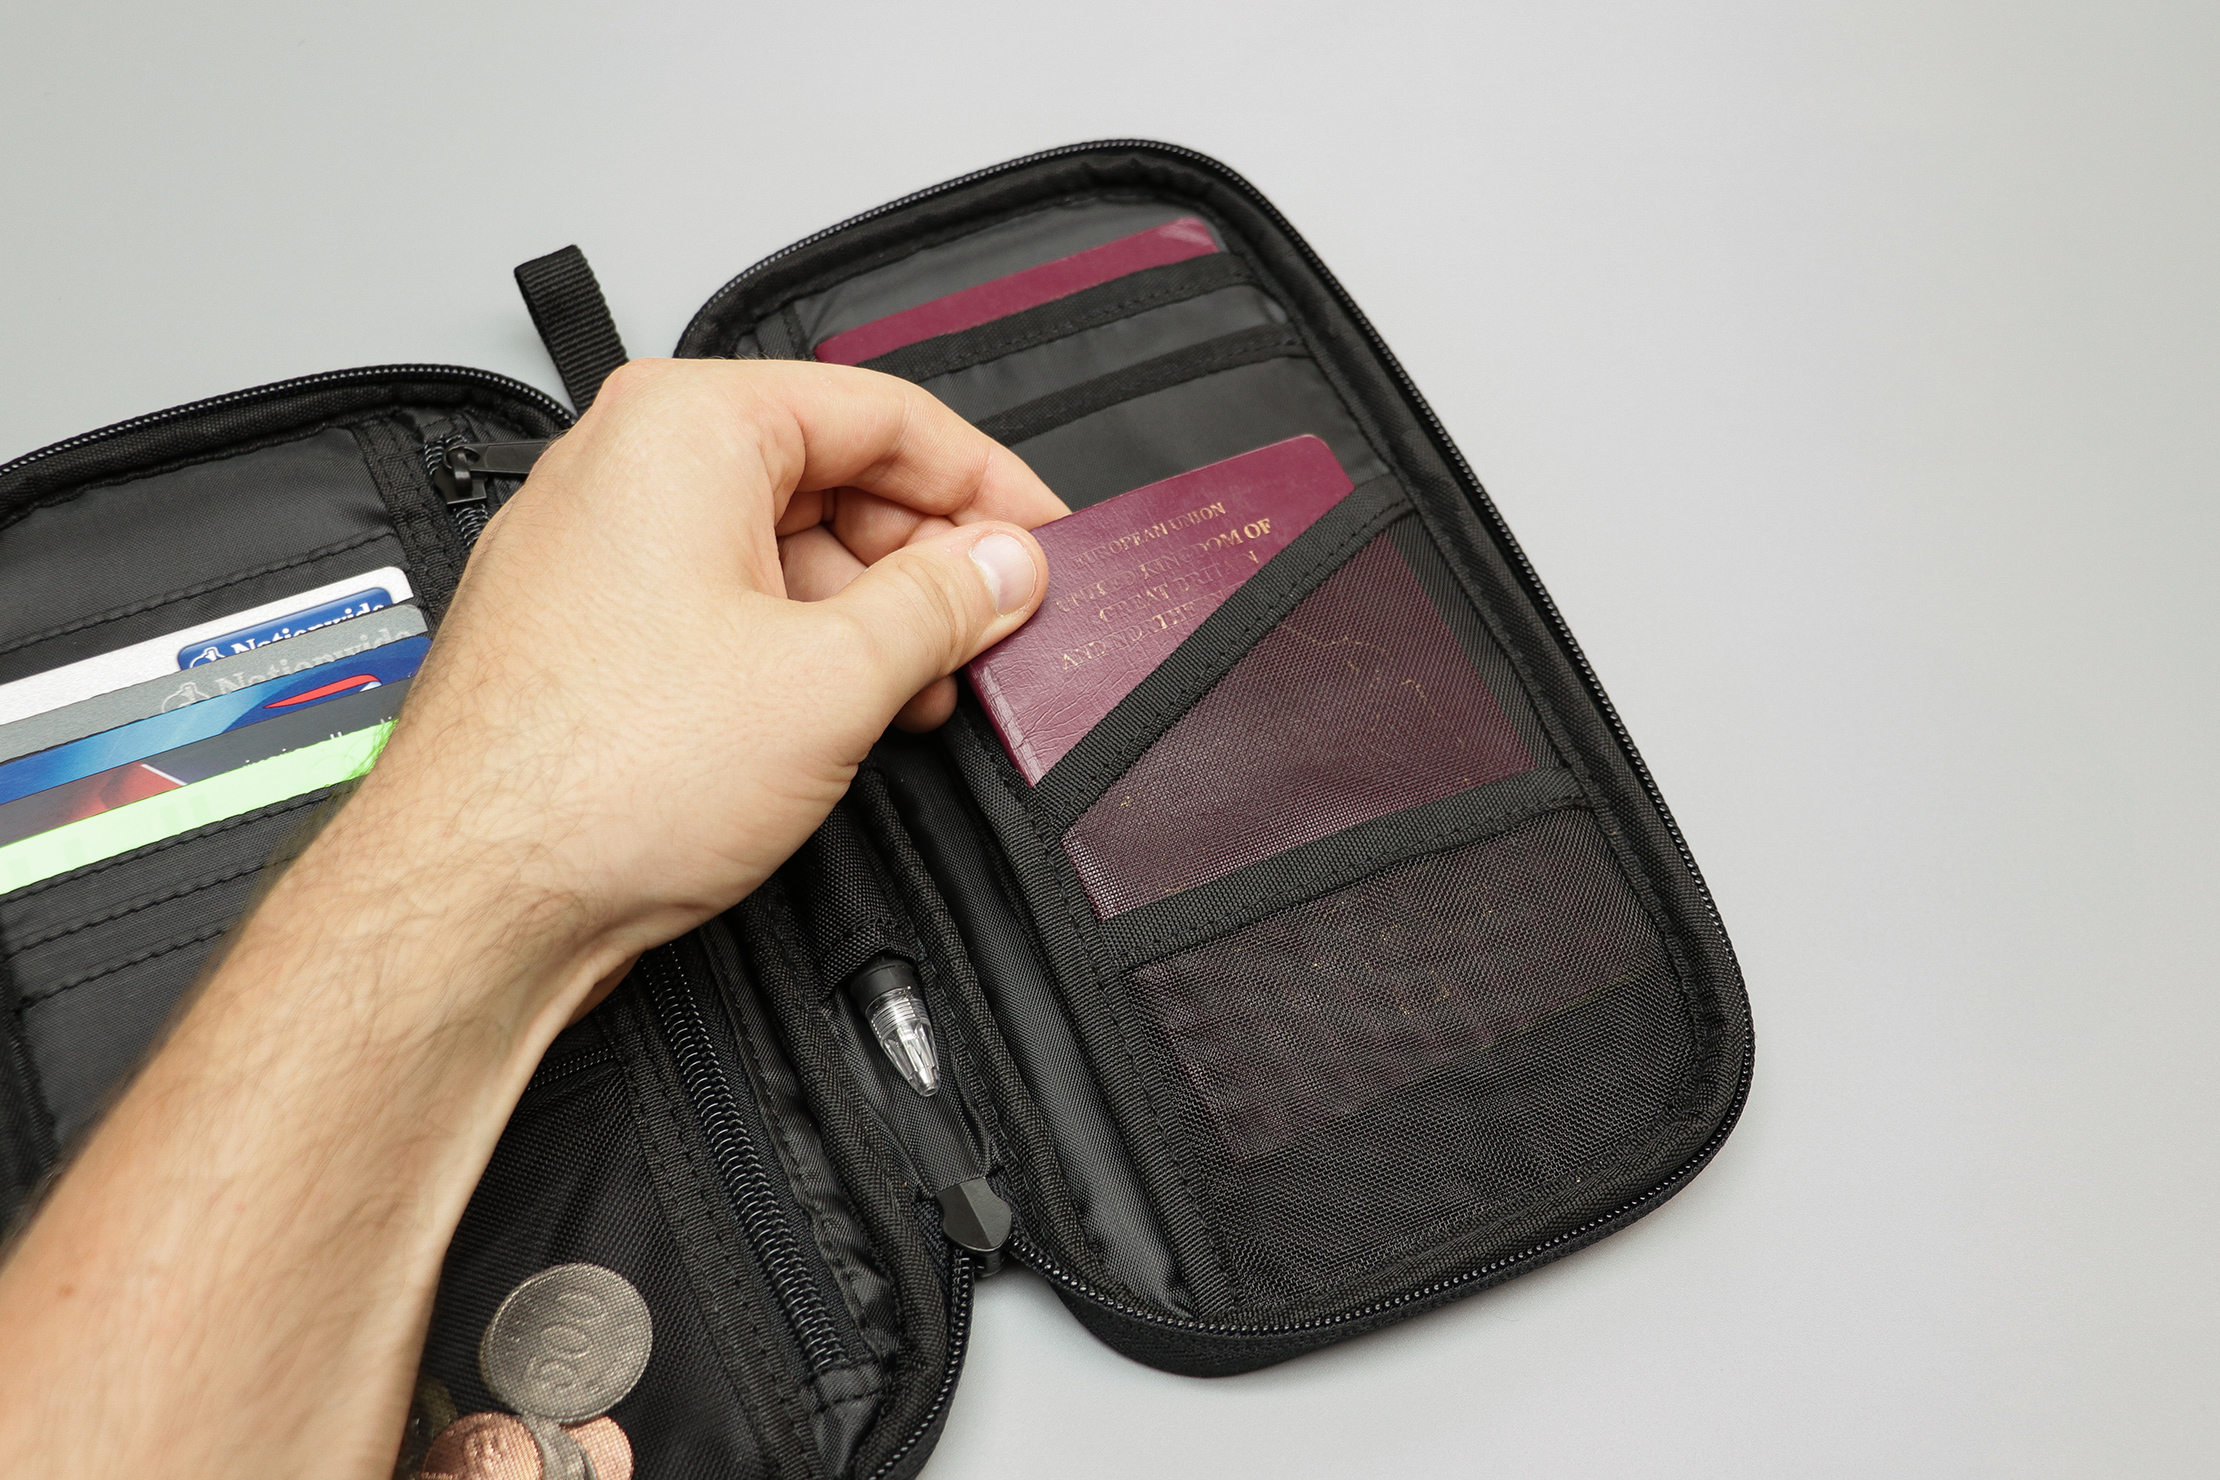 AmazonBasics RFID Travel Passport Wallet With A Passport Inside